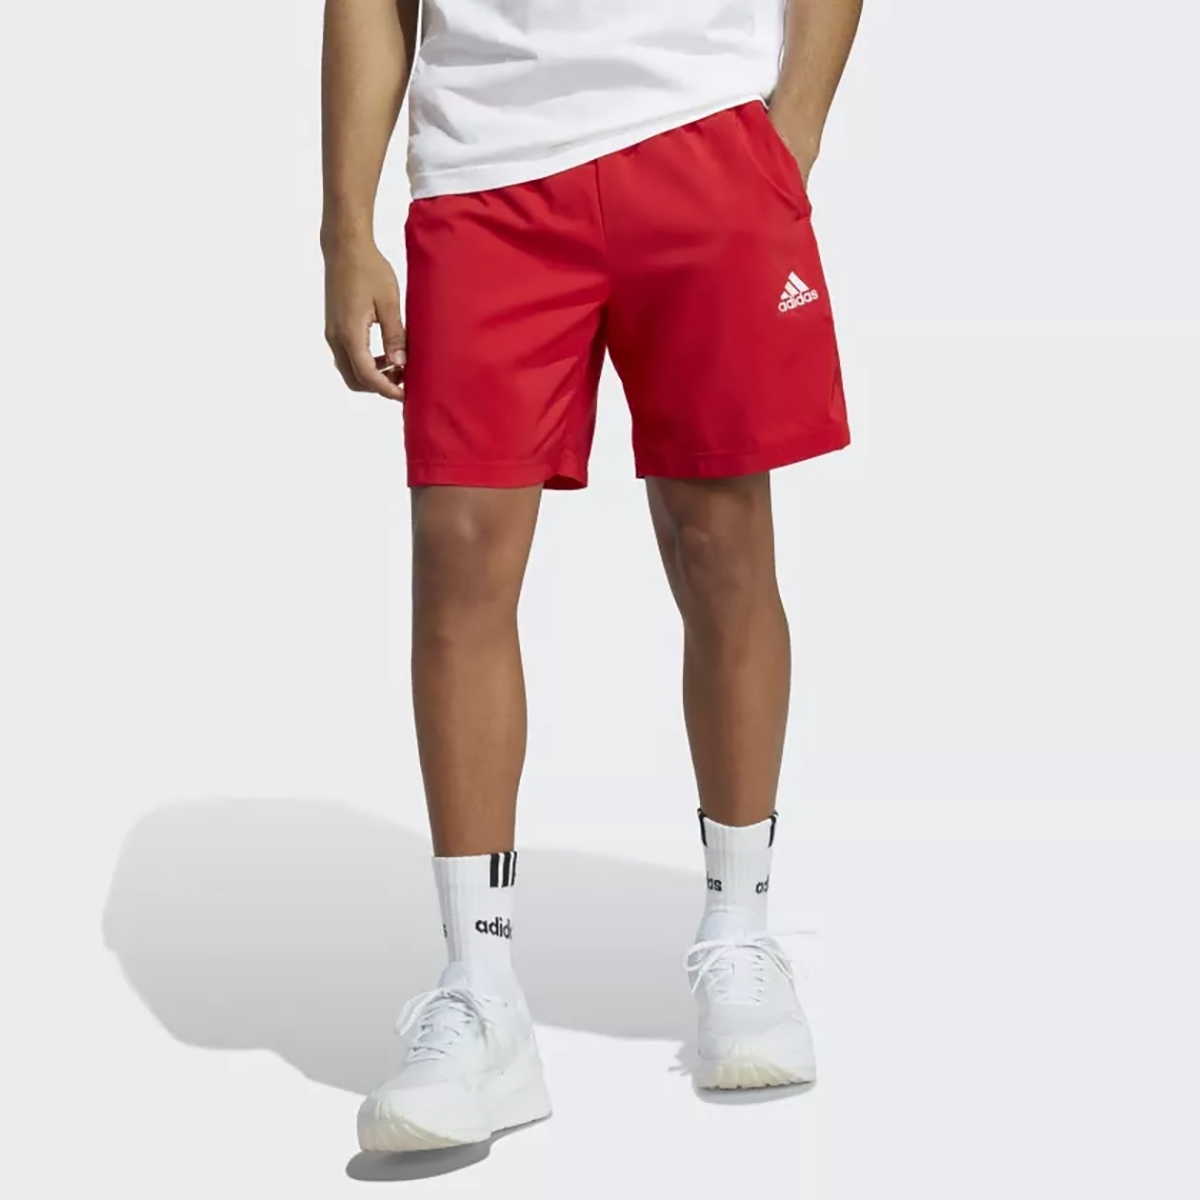 Спортивные шорты Adidas для мужчин, IC1486, размер L, бордово-белые-AETG